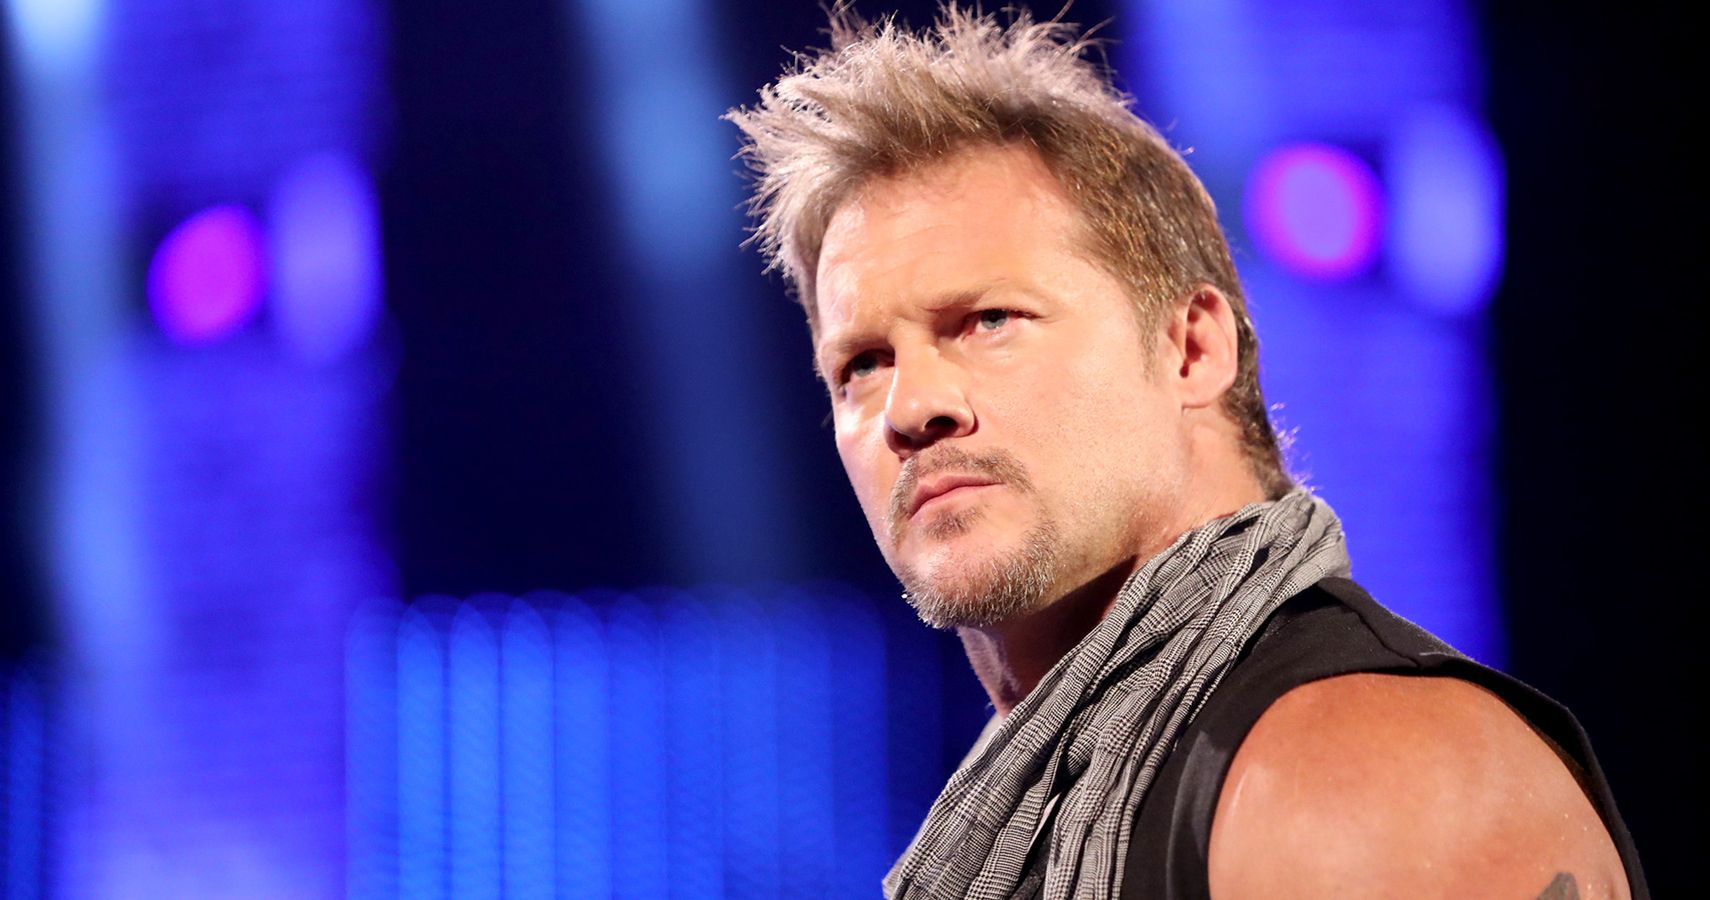 The 10 Biggest Stars Of WWE’s PG Era